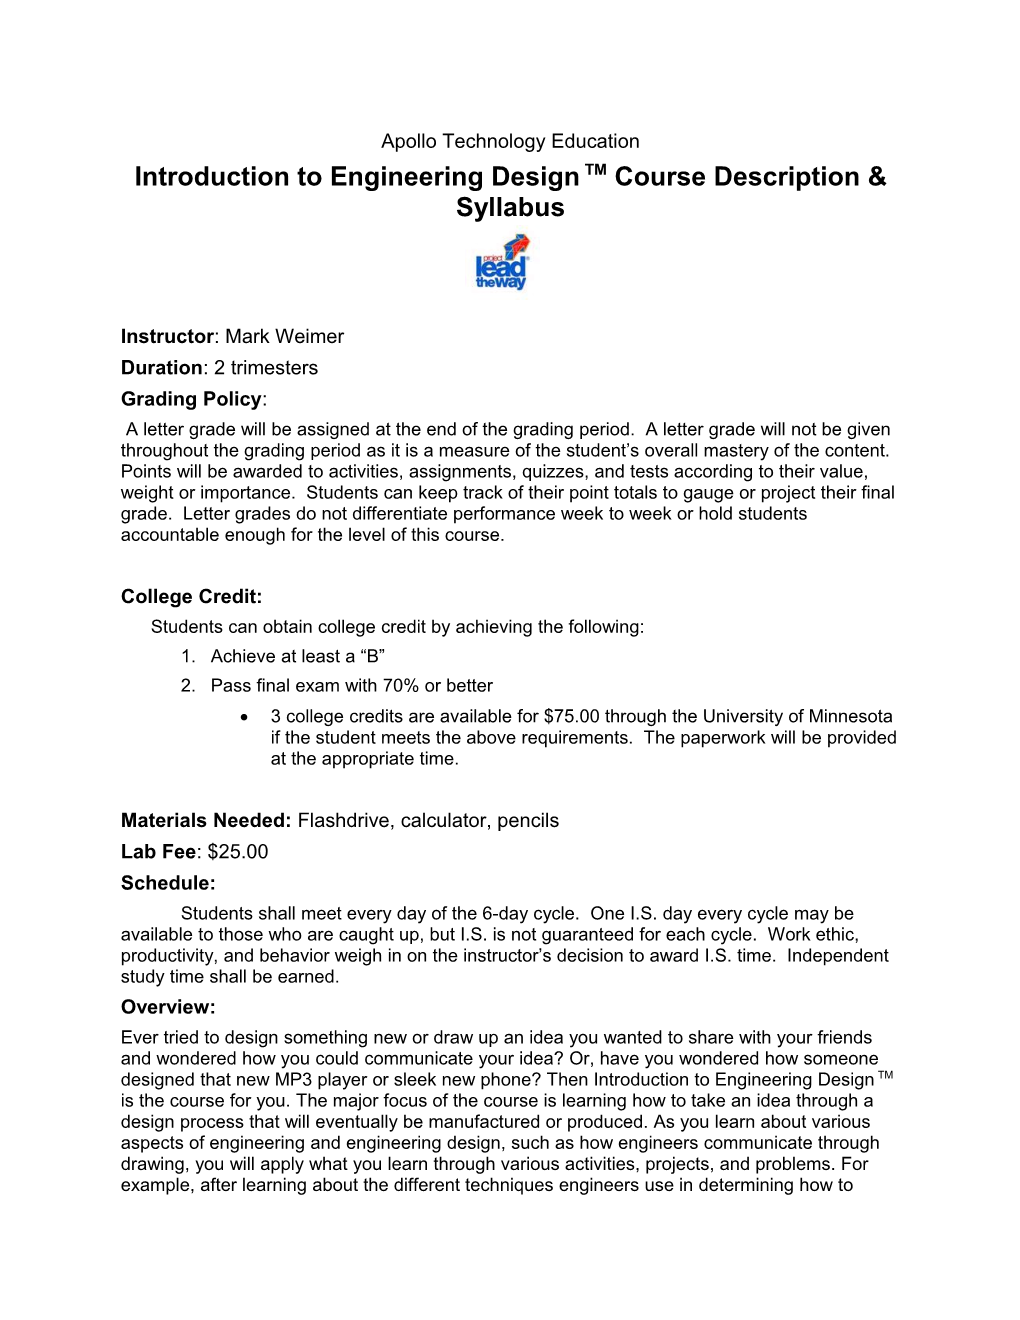 Introduction to Engineering Design TM Course Description & Syllabus